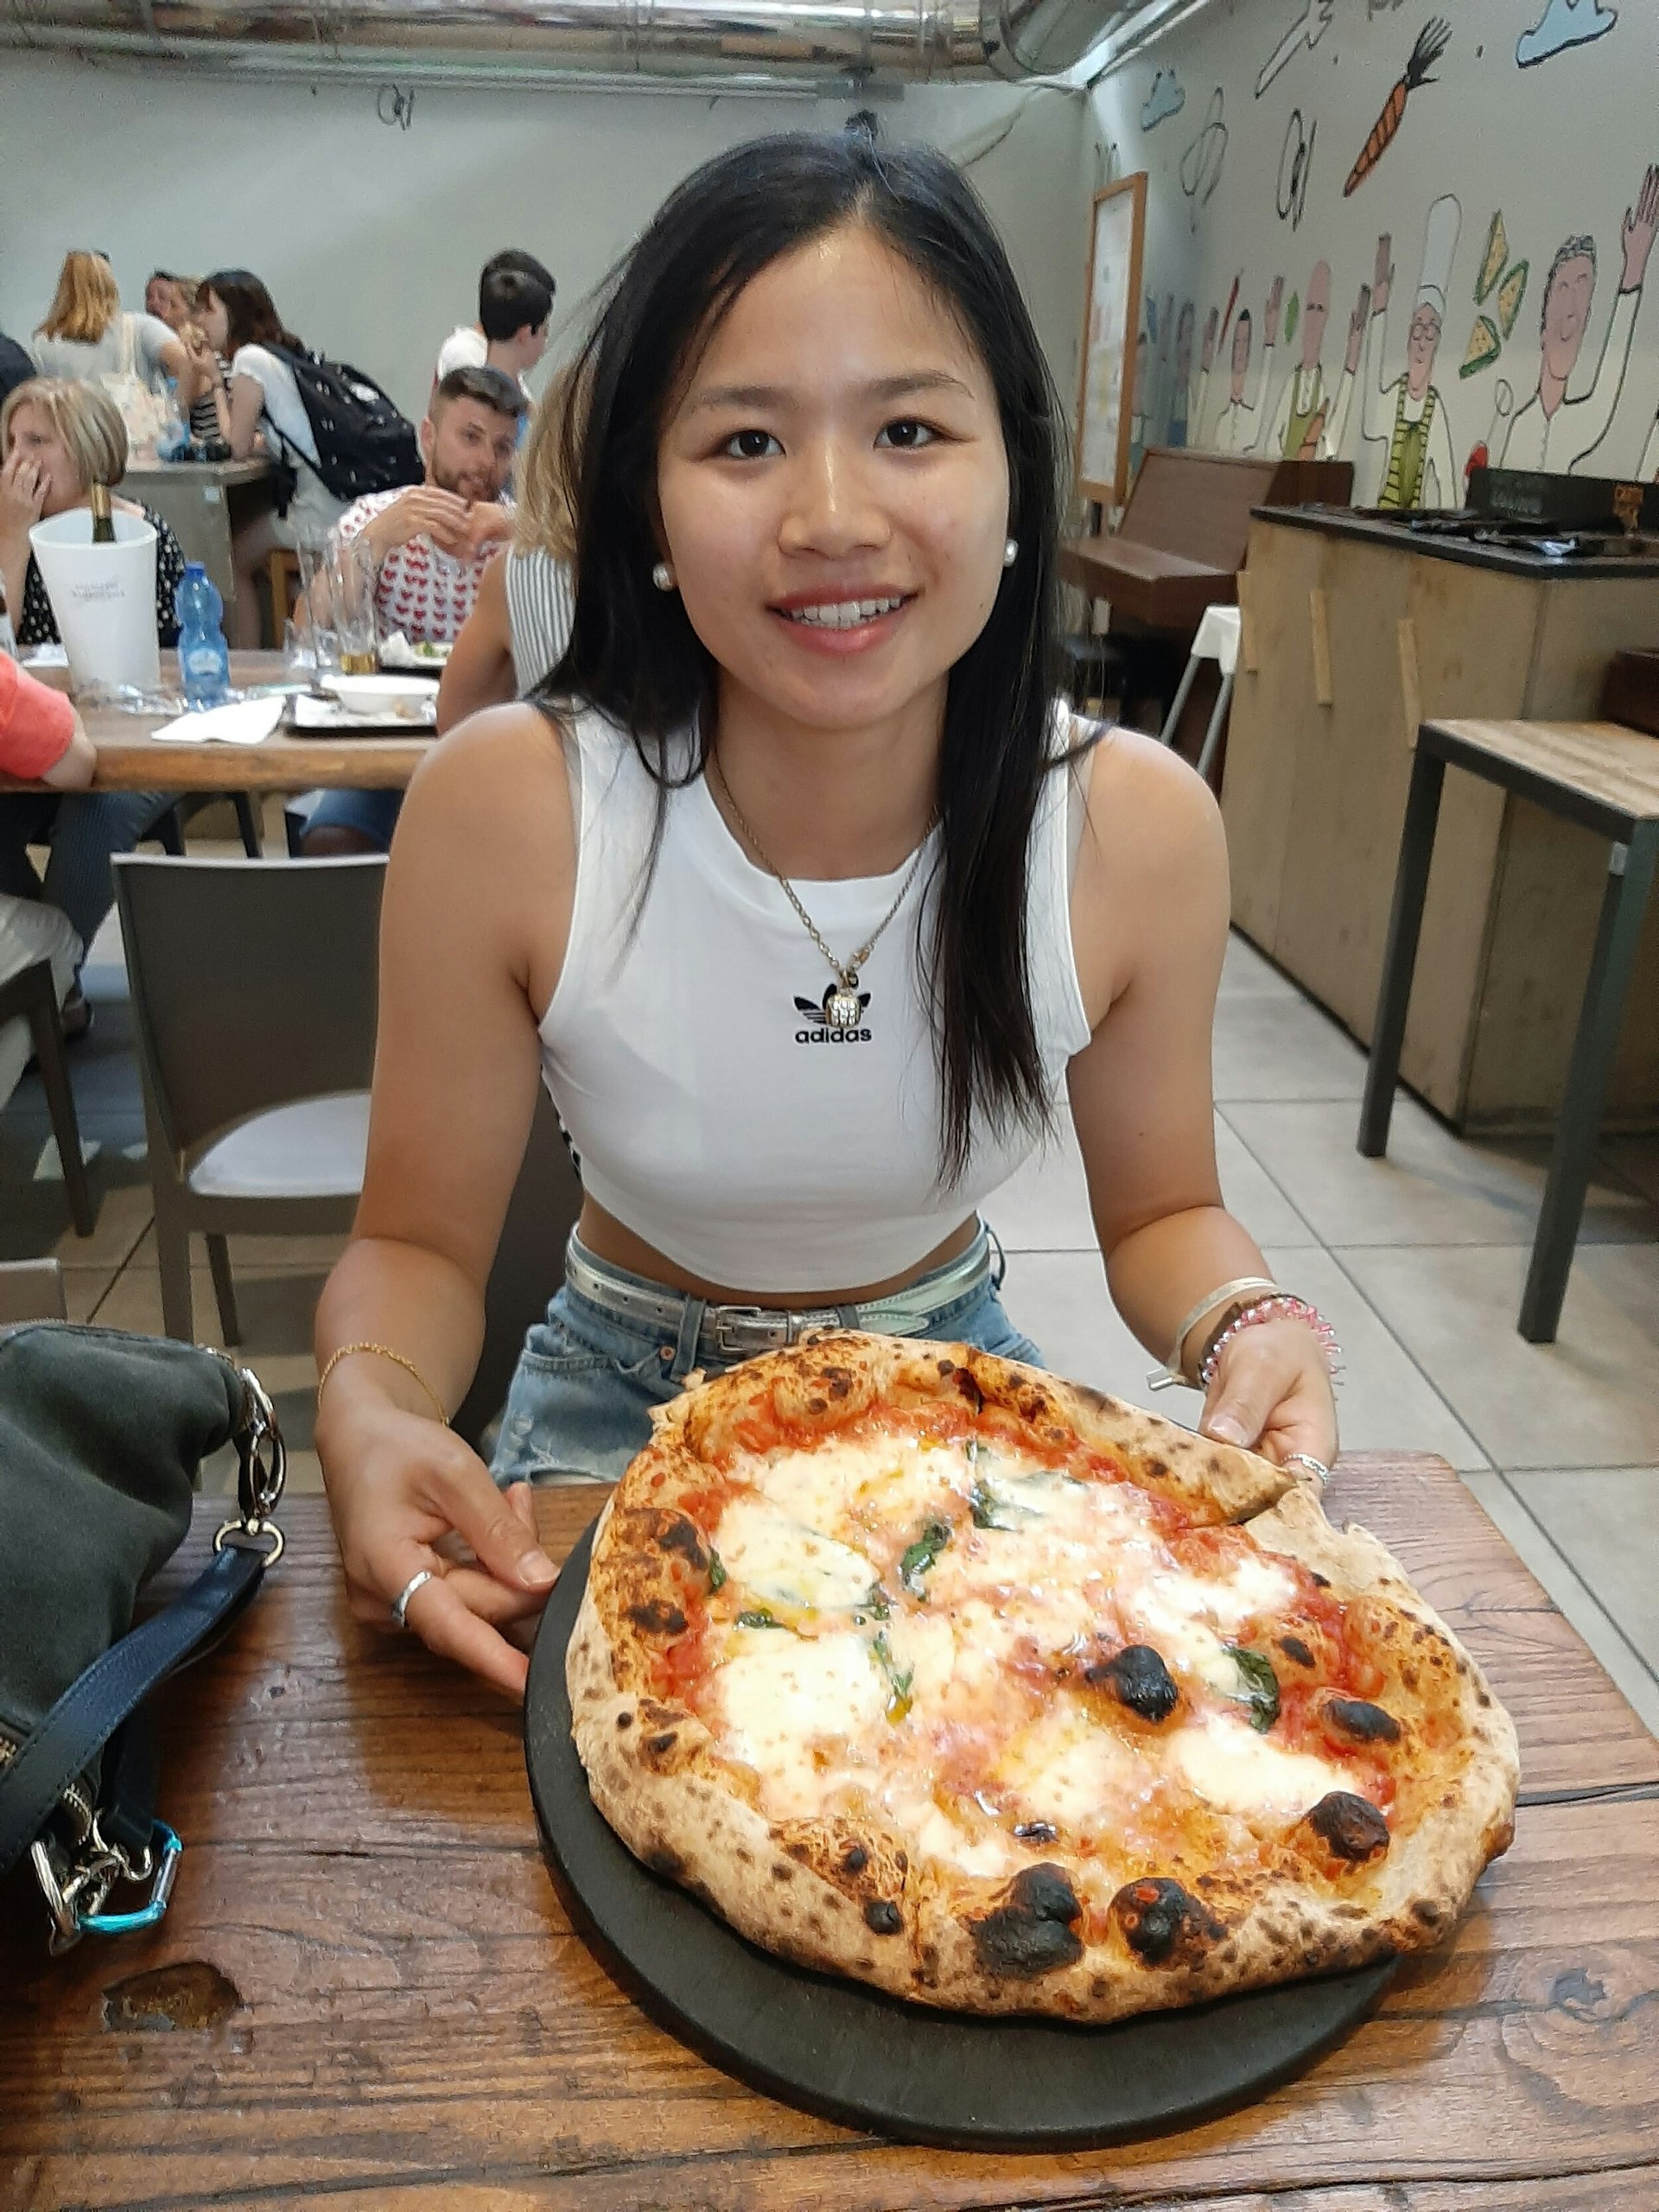 Bjana with a pizza